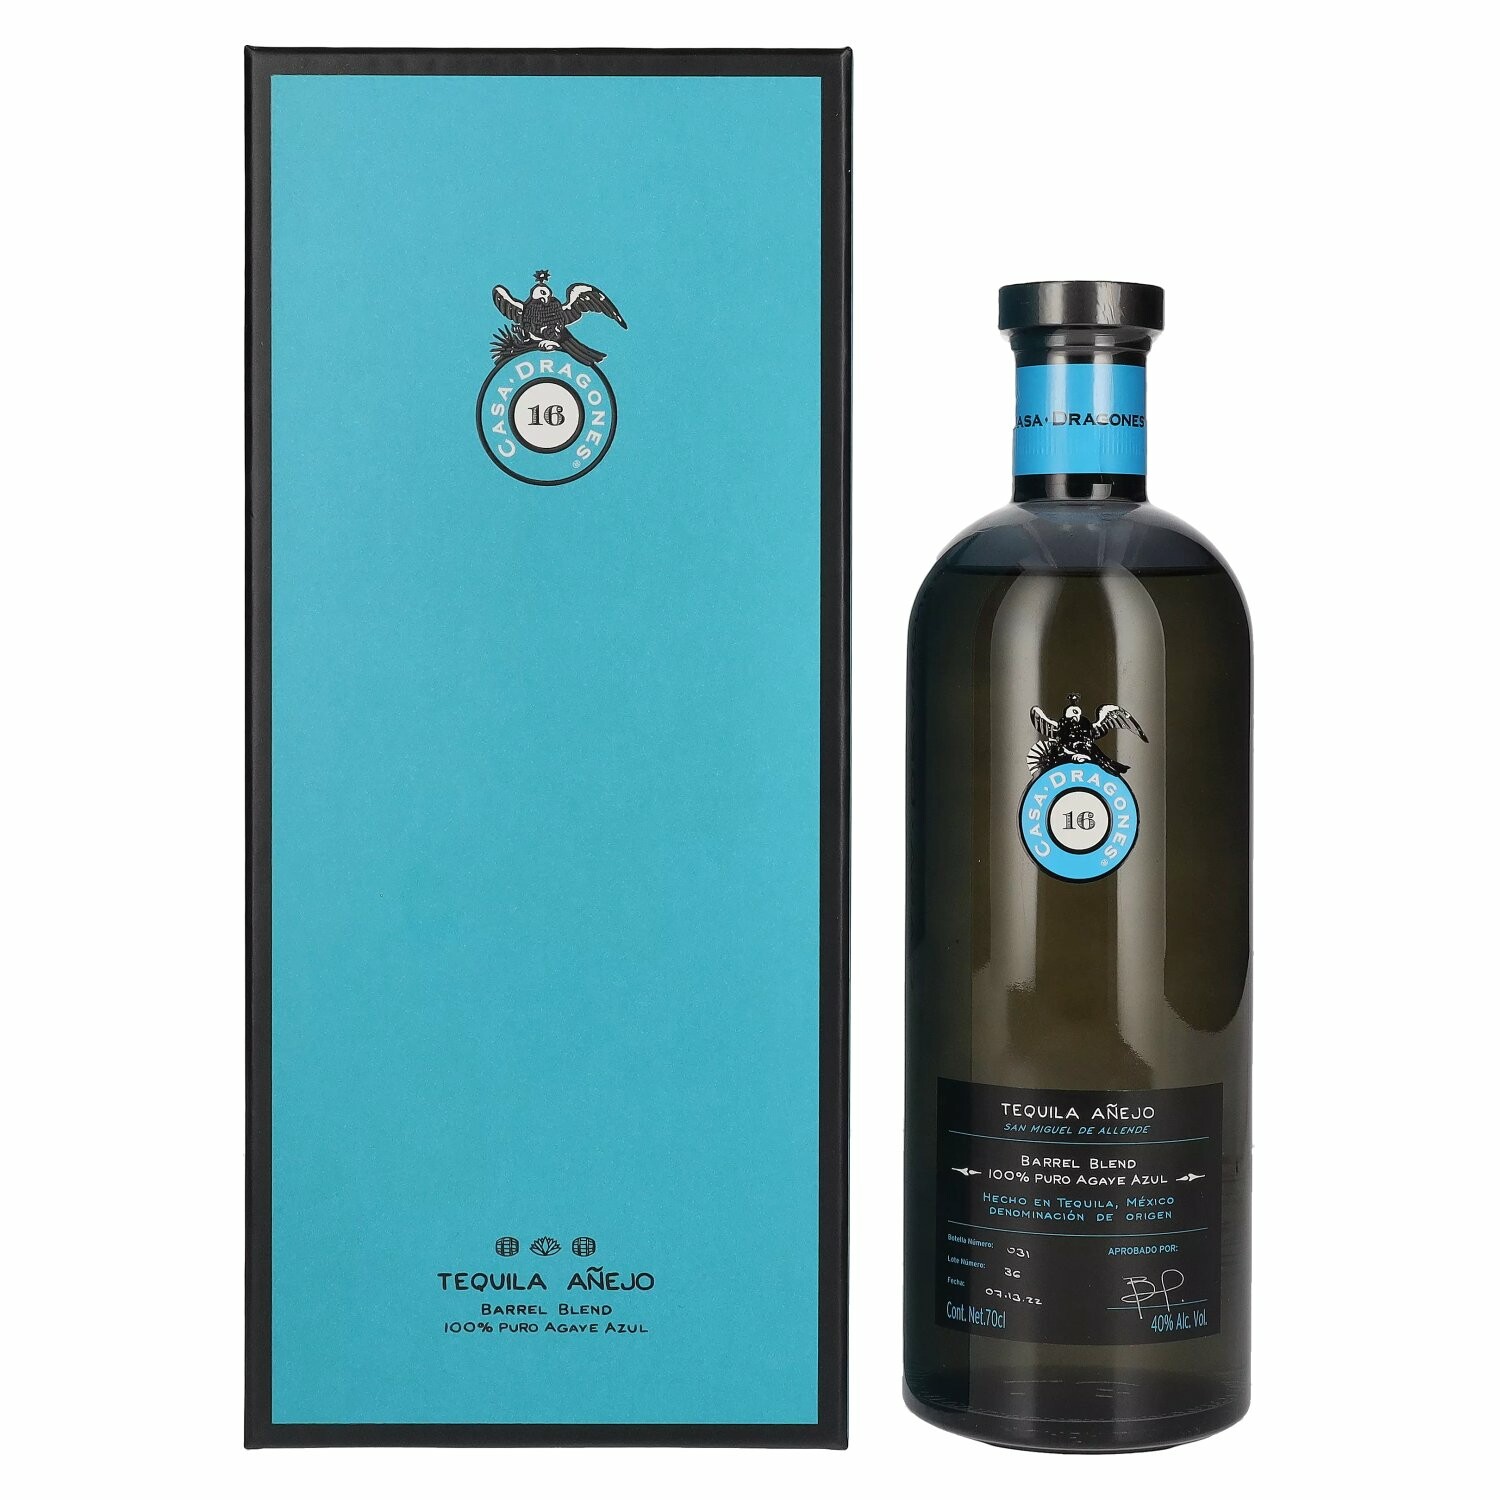 Casa Dragones Tequila AÑEJO Barrel Blend 100% Puro Agave Azul 40% Vol. 0,7l in Giftbox